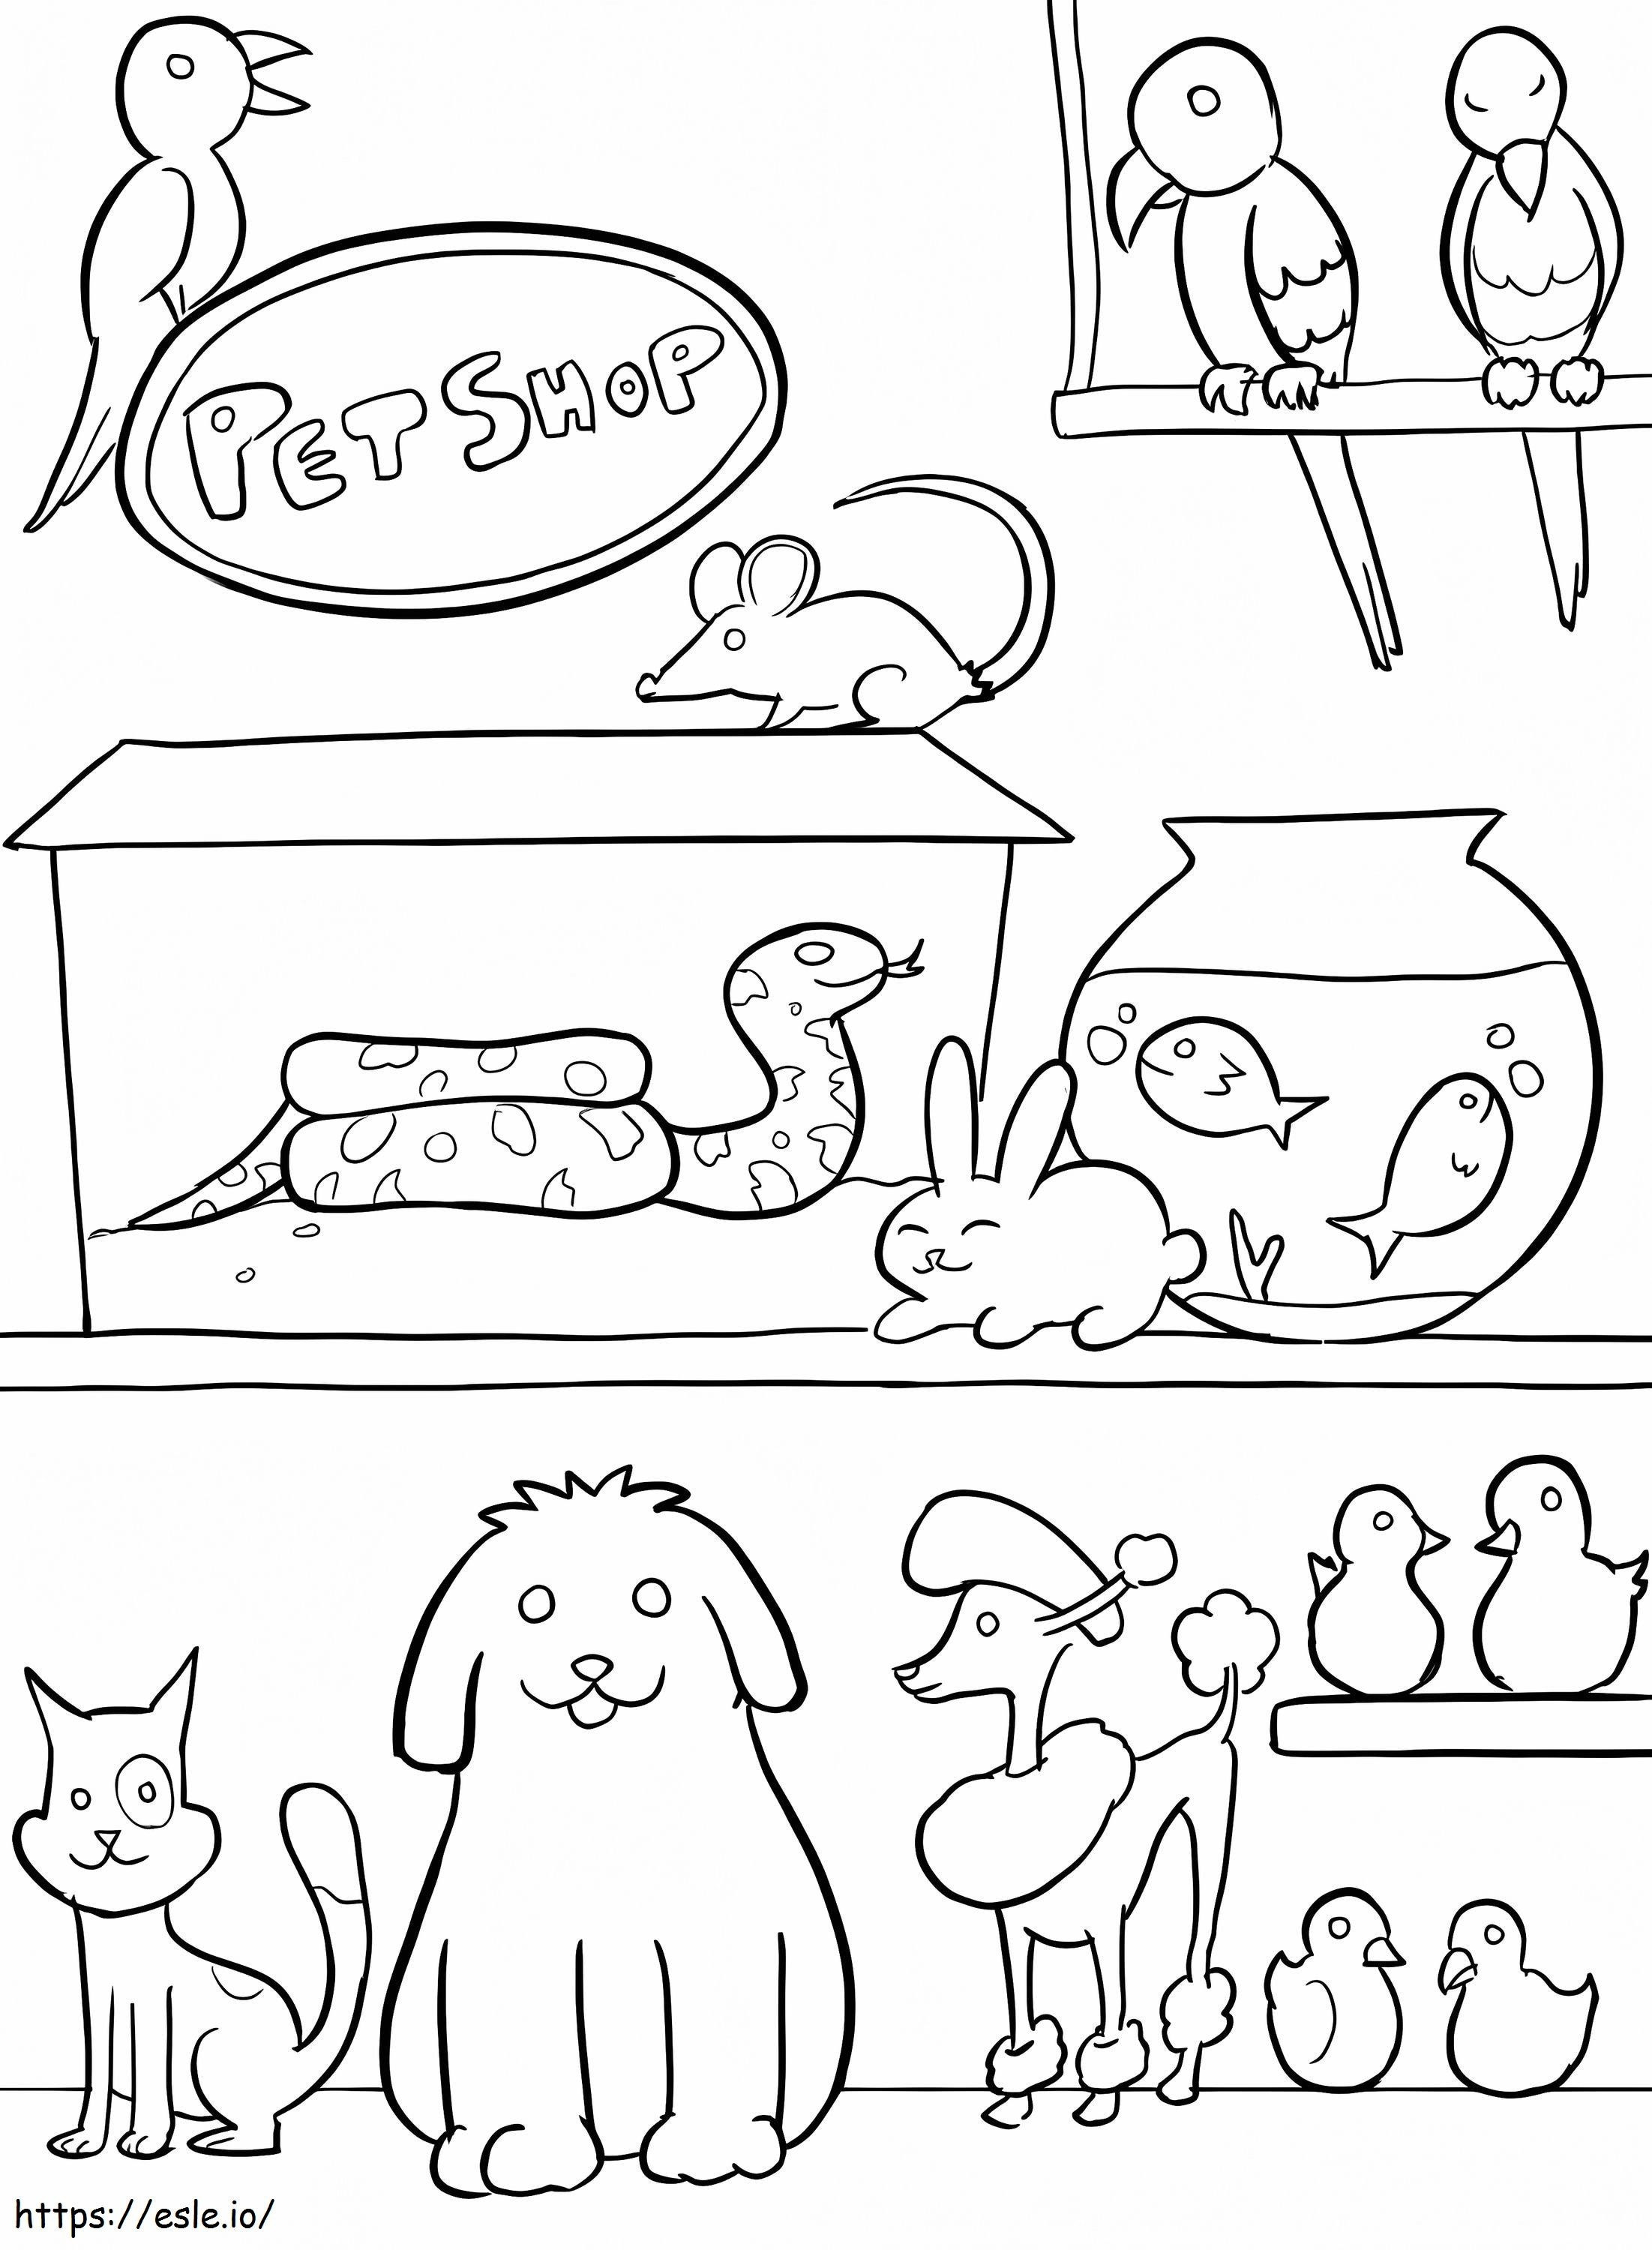 Pet Shop To Print coloring page